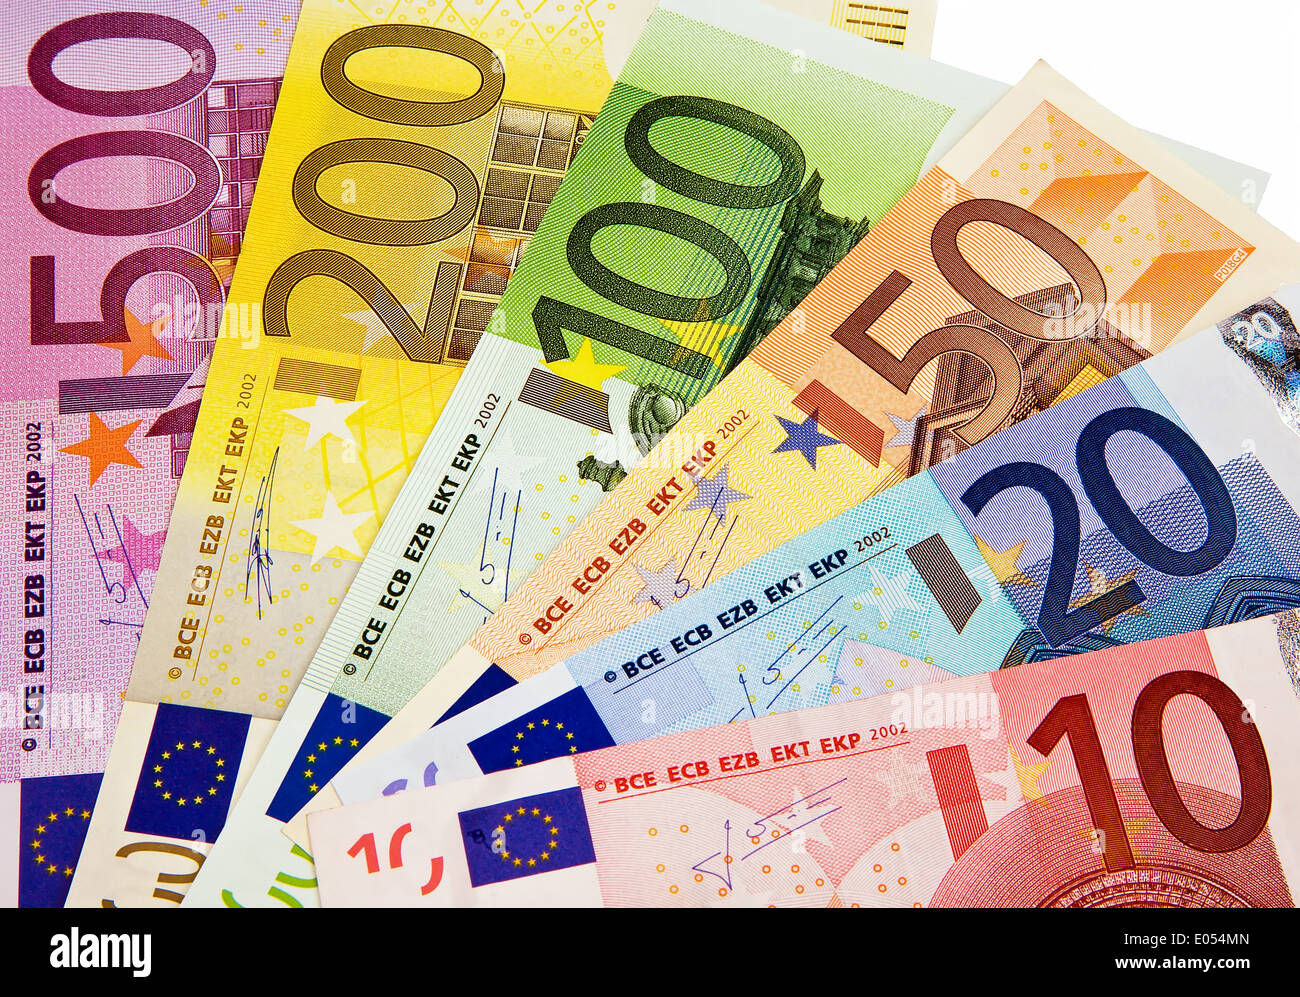 .Currency economy notes light paper money money economy monetary system bank notes bank note money eurozone eurocurrency eurocur Stock Photo